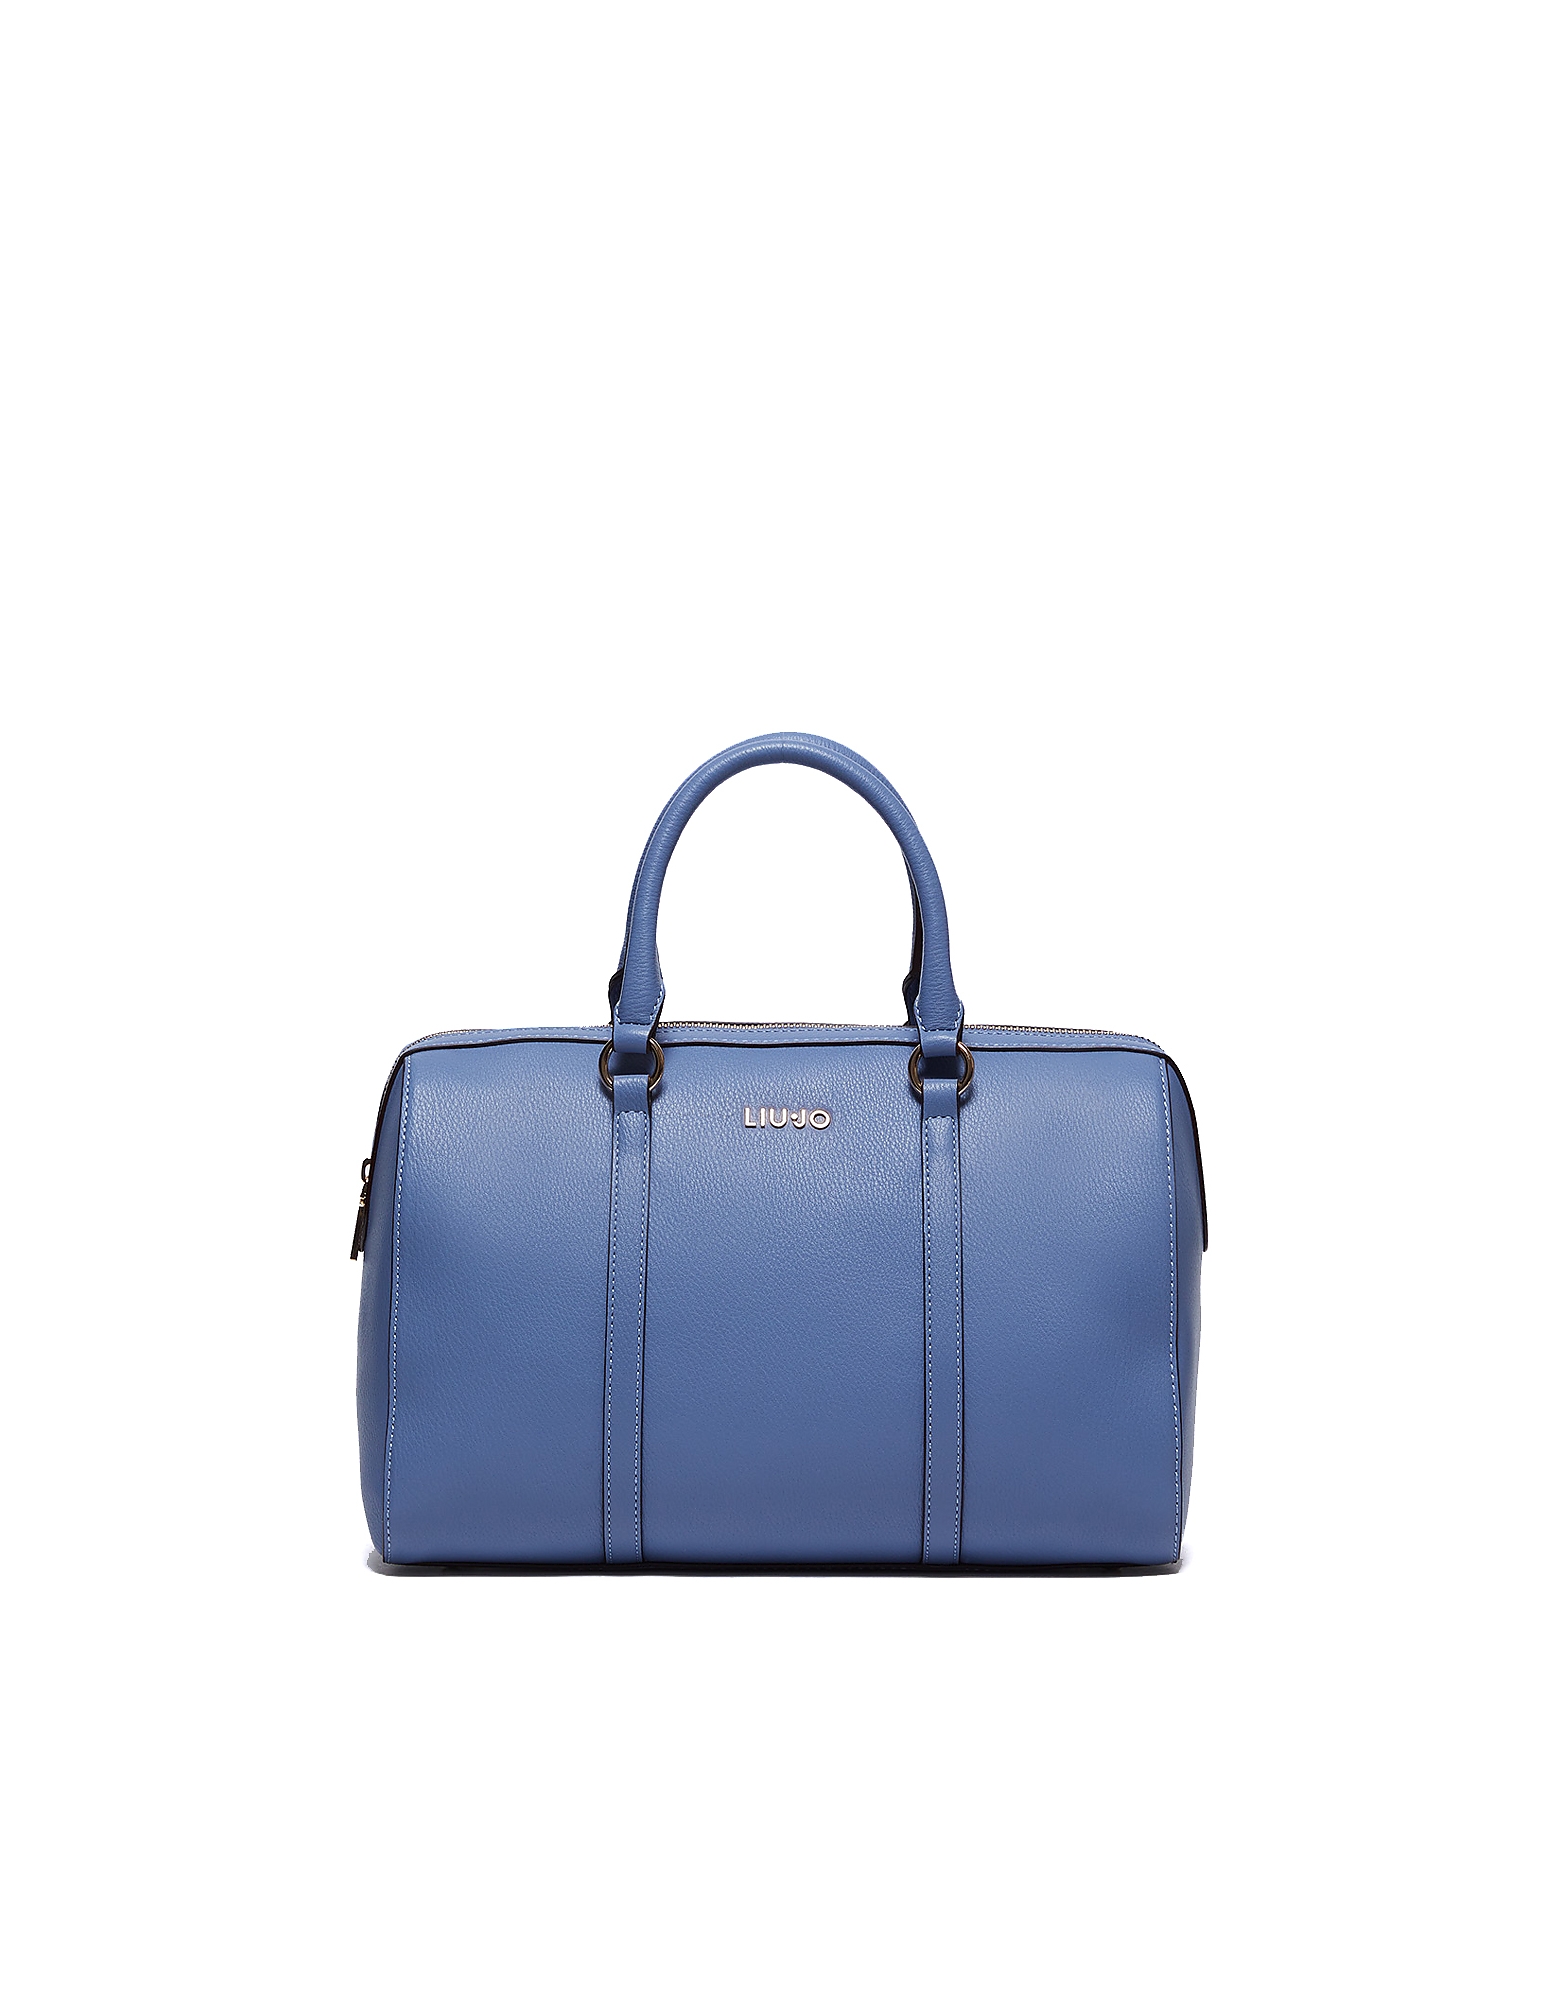 Liu •jo Designer Handbags Women's Blue Bag